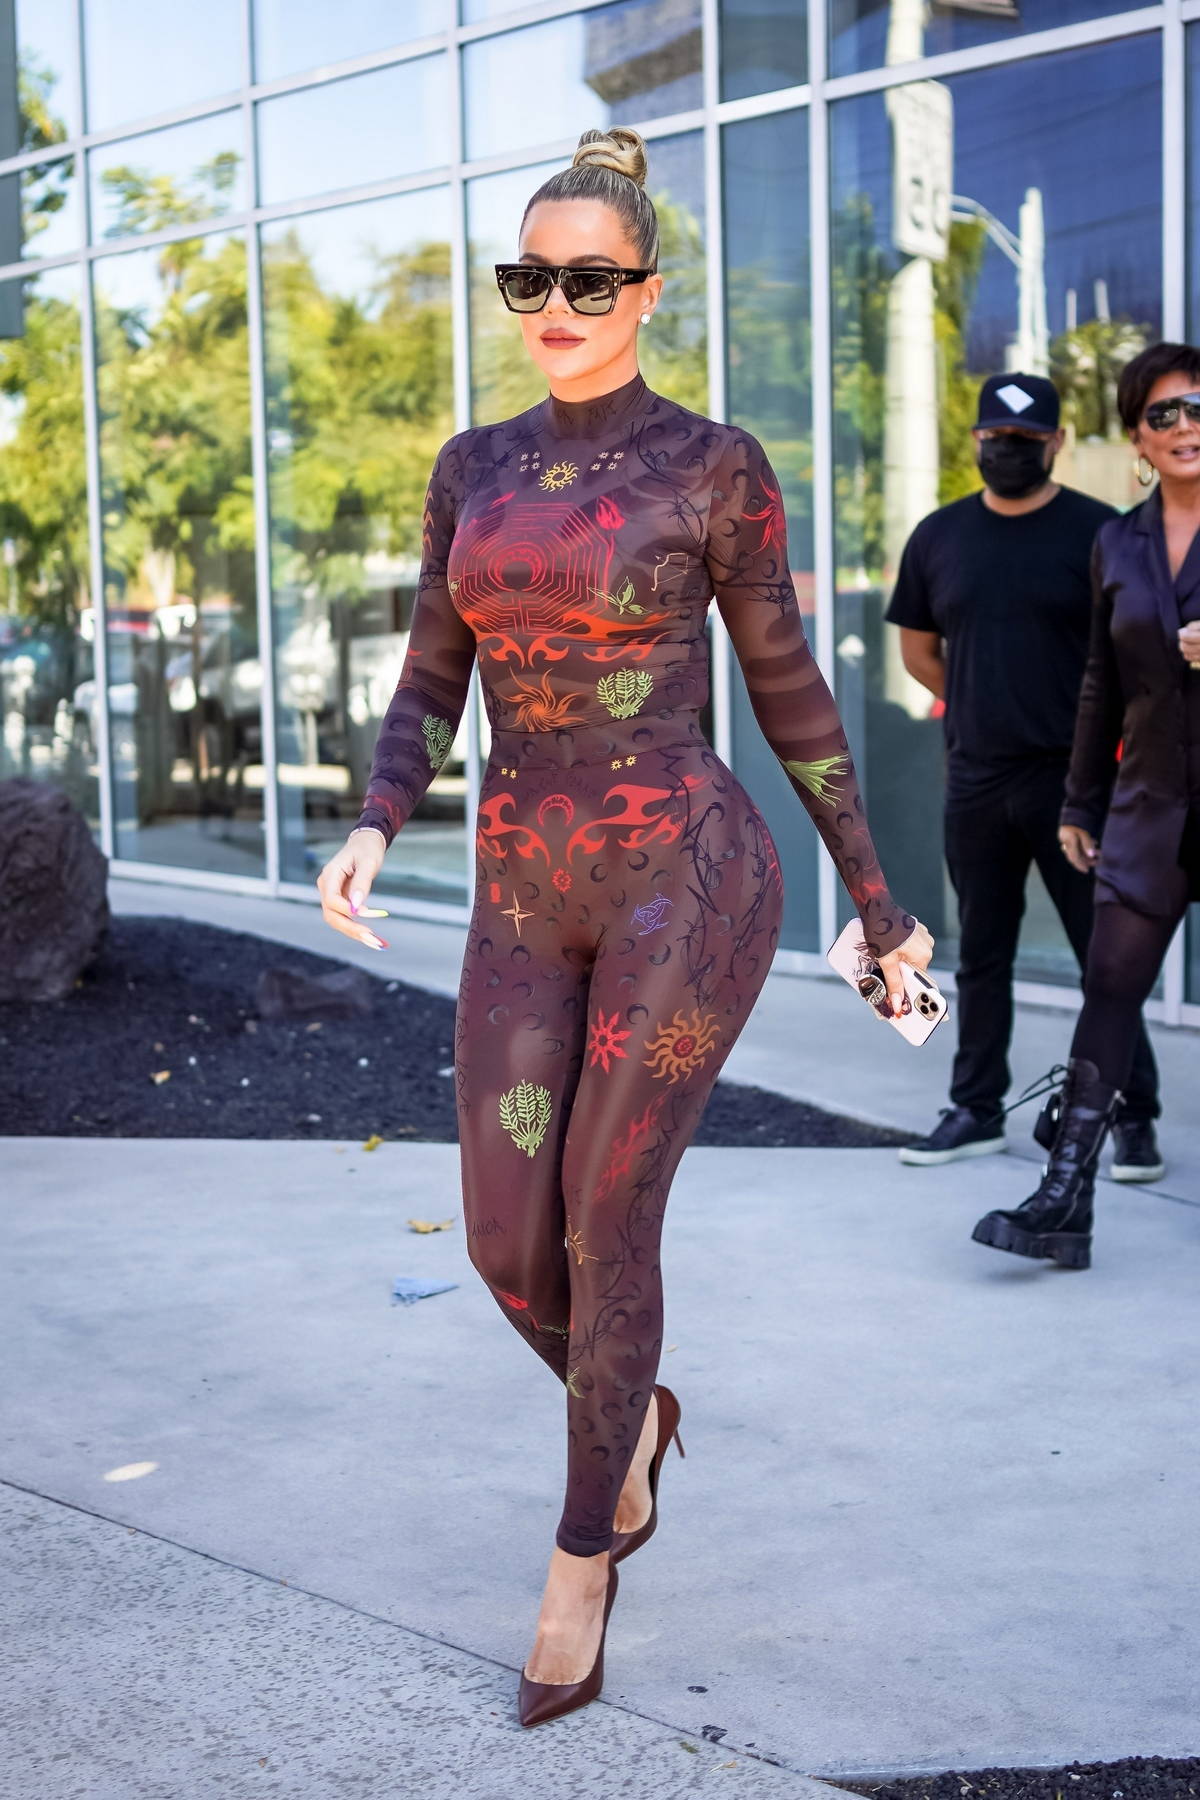 Khloe Kardashian parades her sensational figure in a skintight